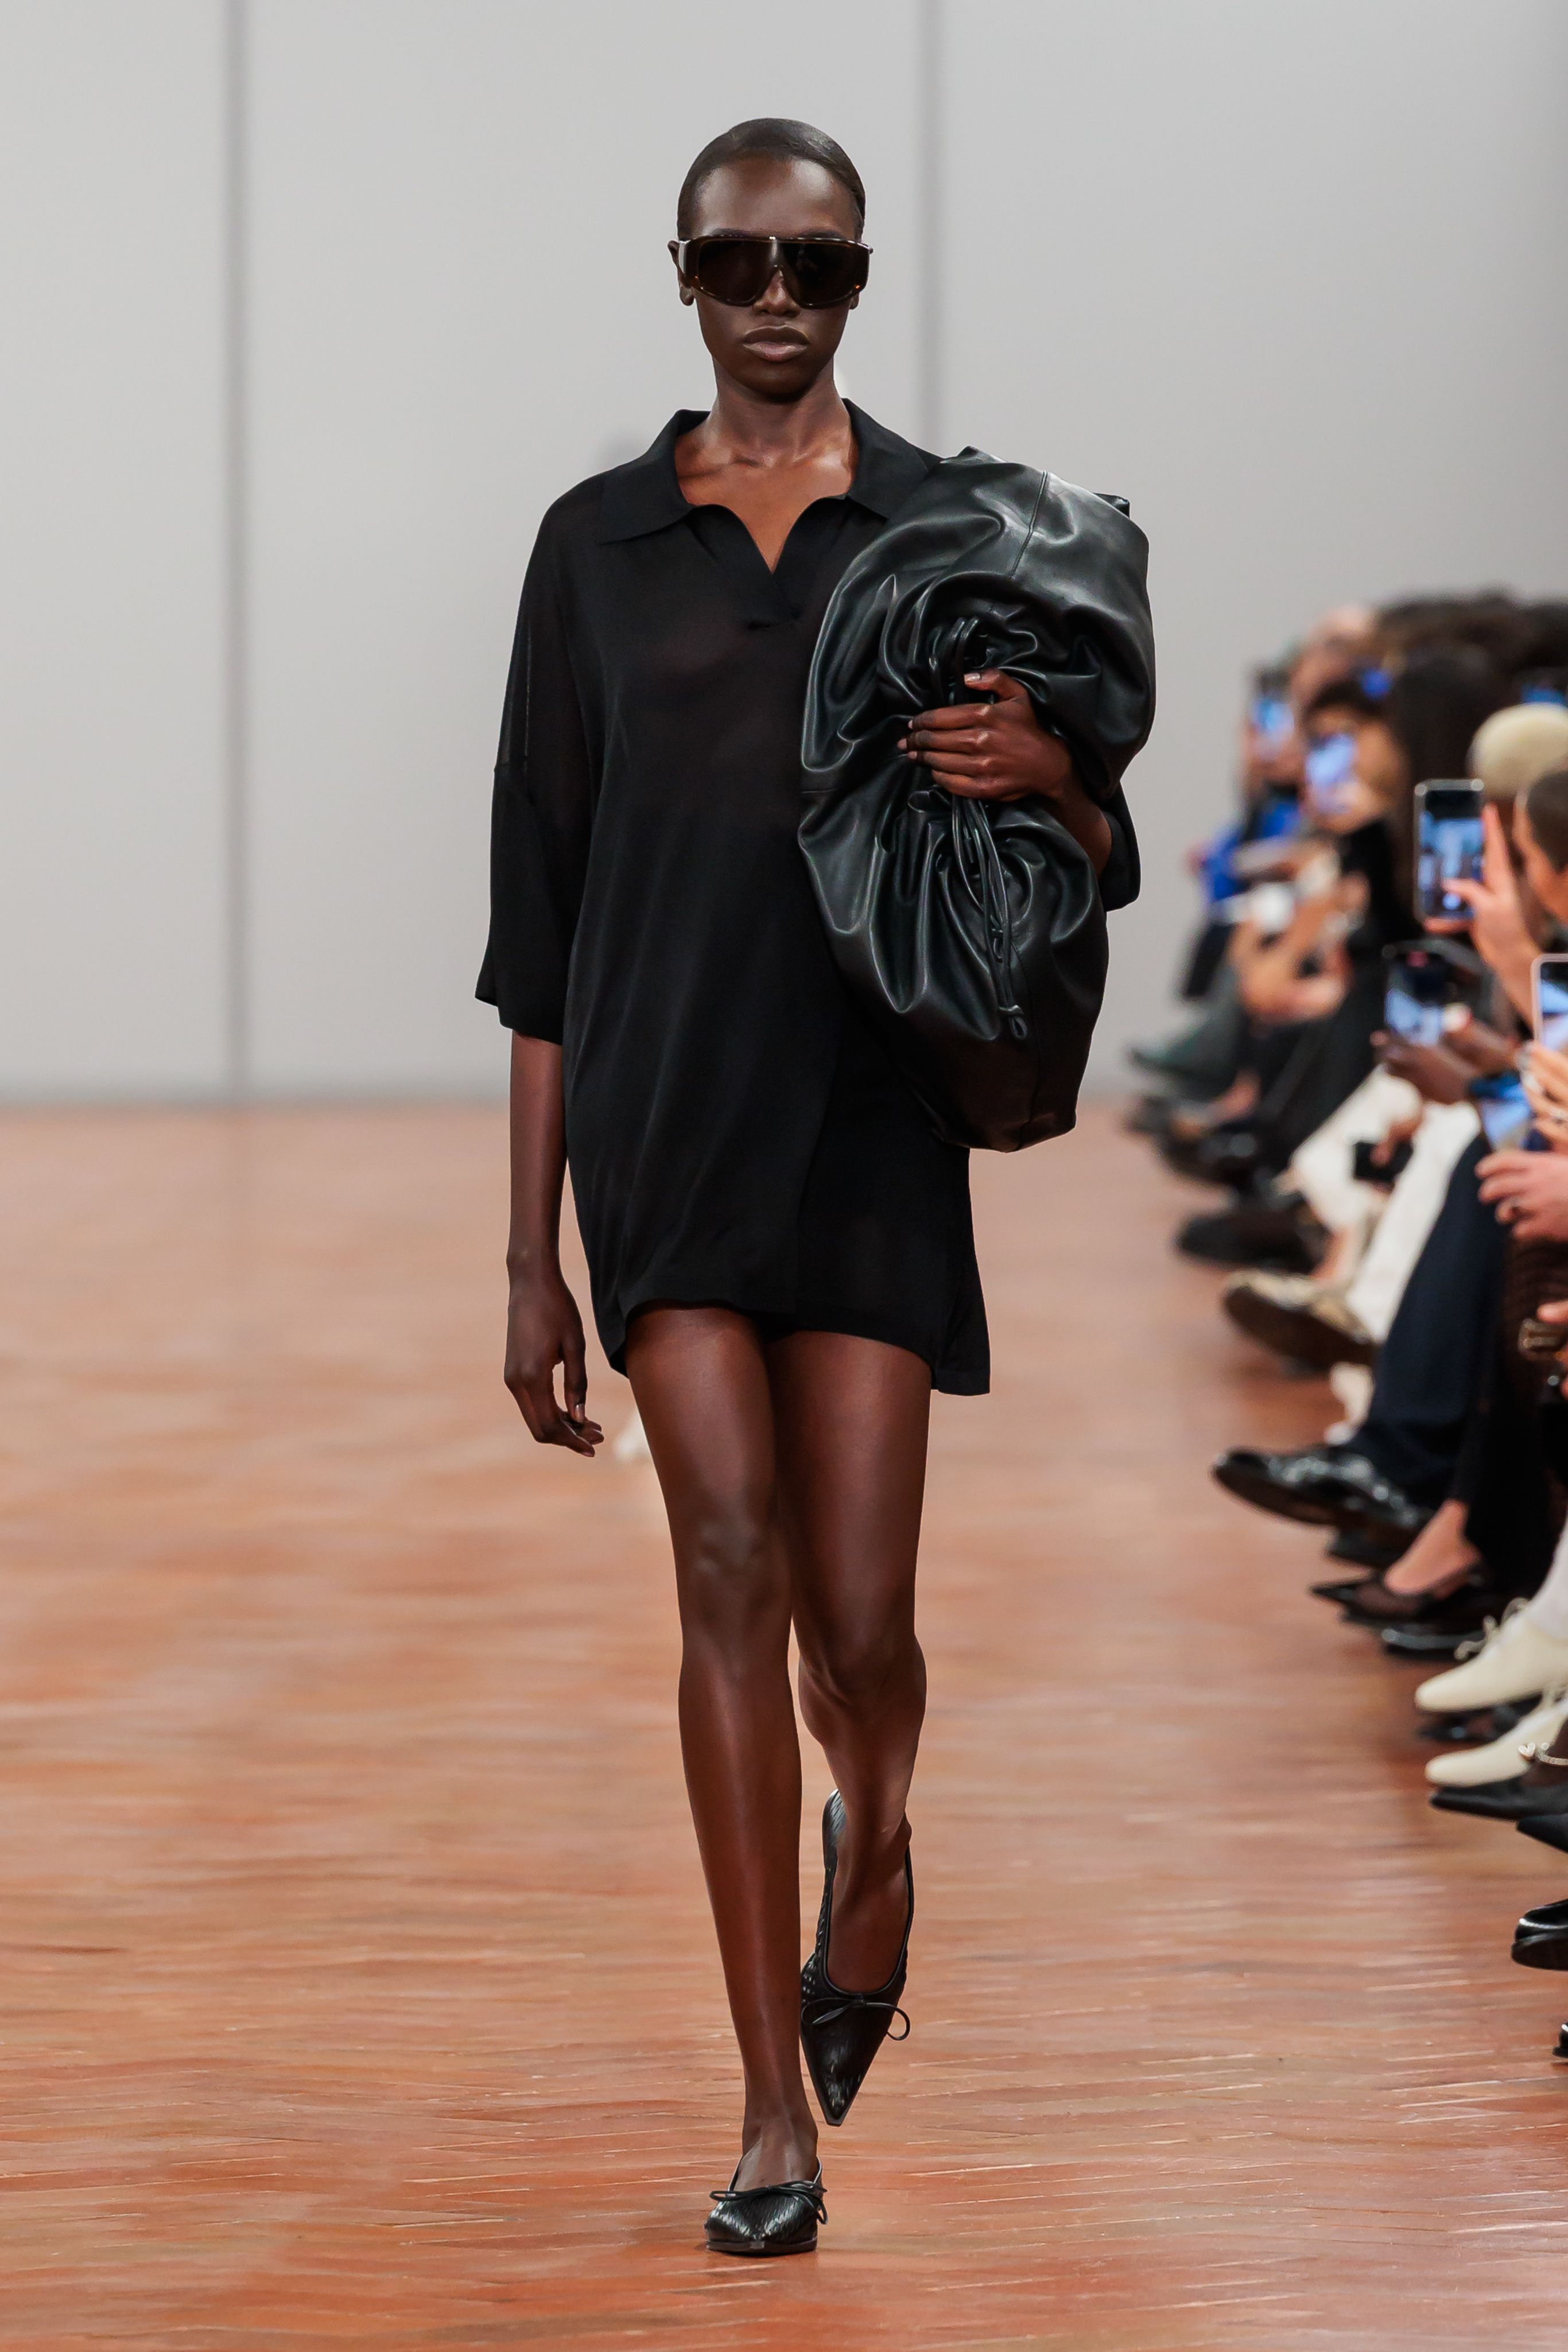 Model on runway showcasing a black dress and large ruffled green sleeve accessory